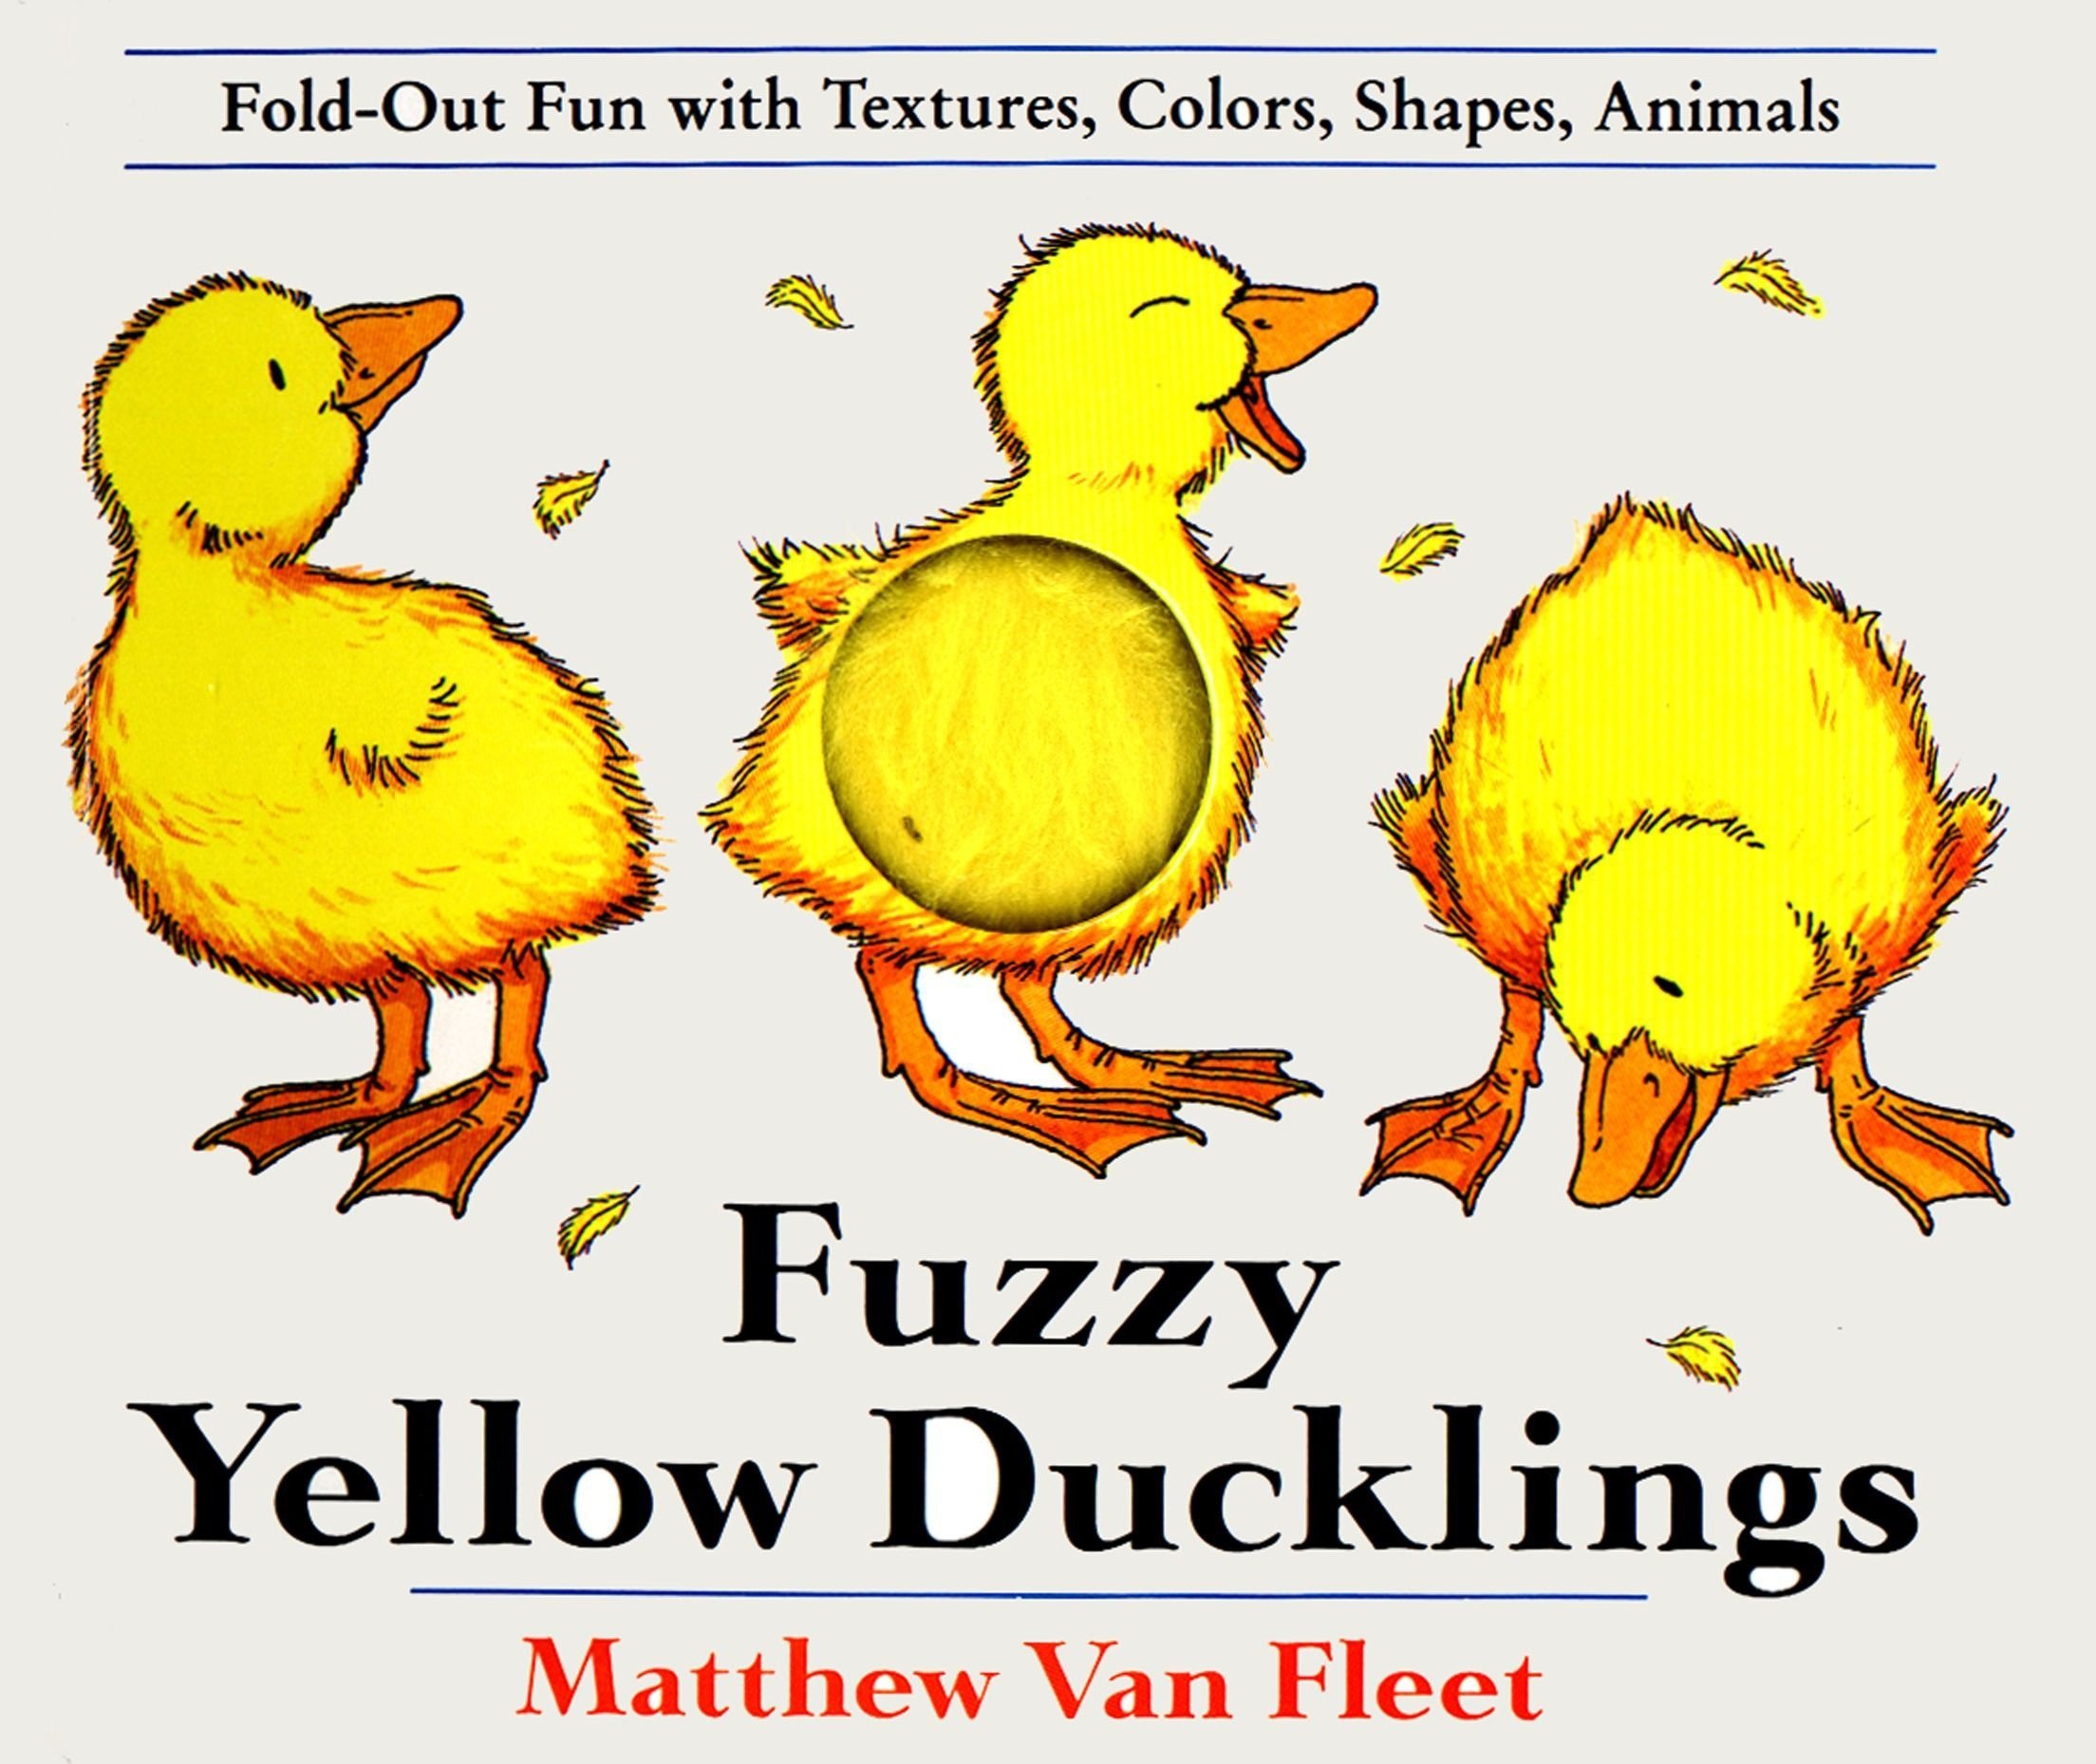 Yellow ducklings photo